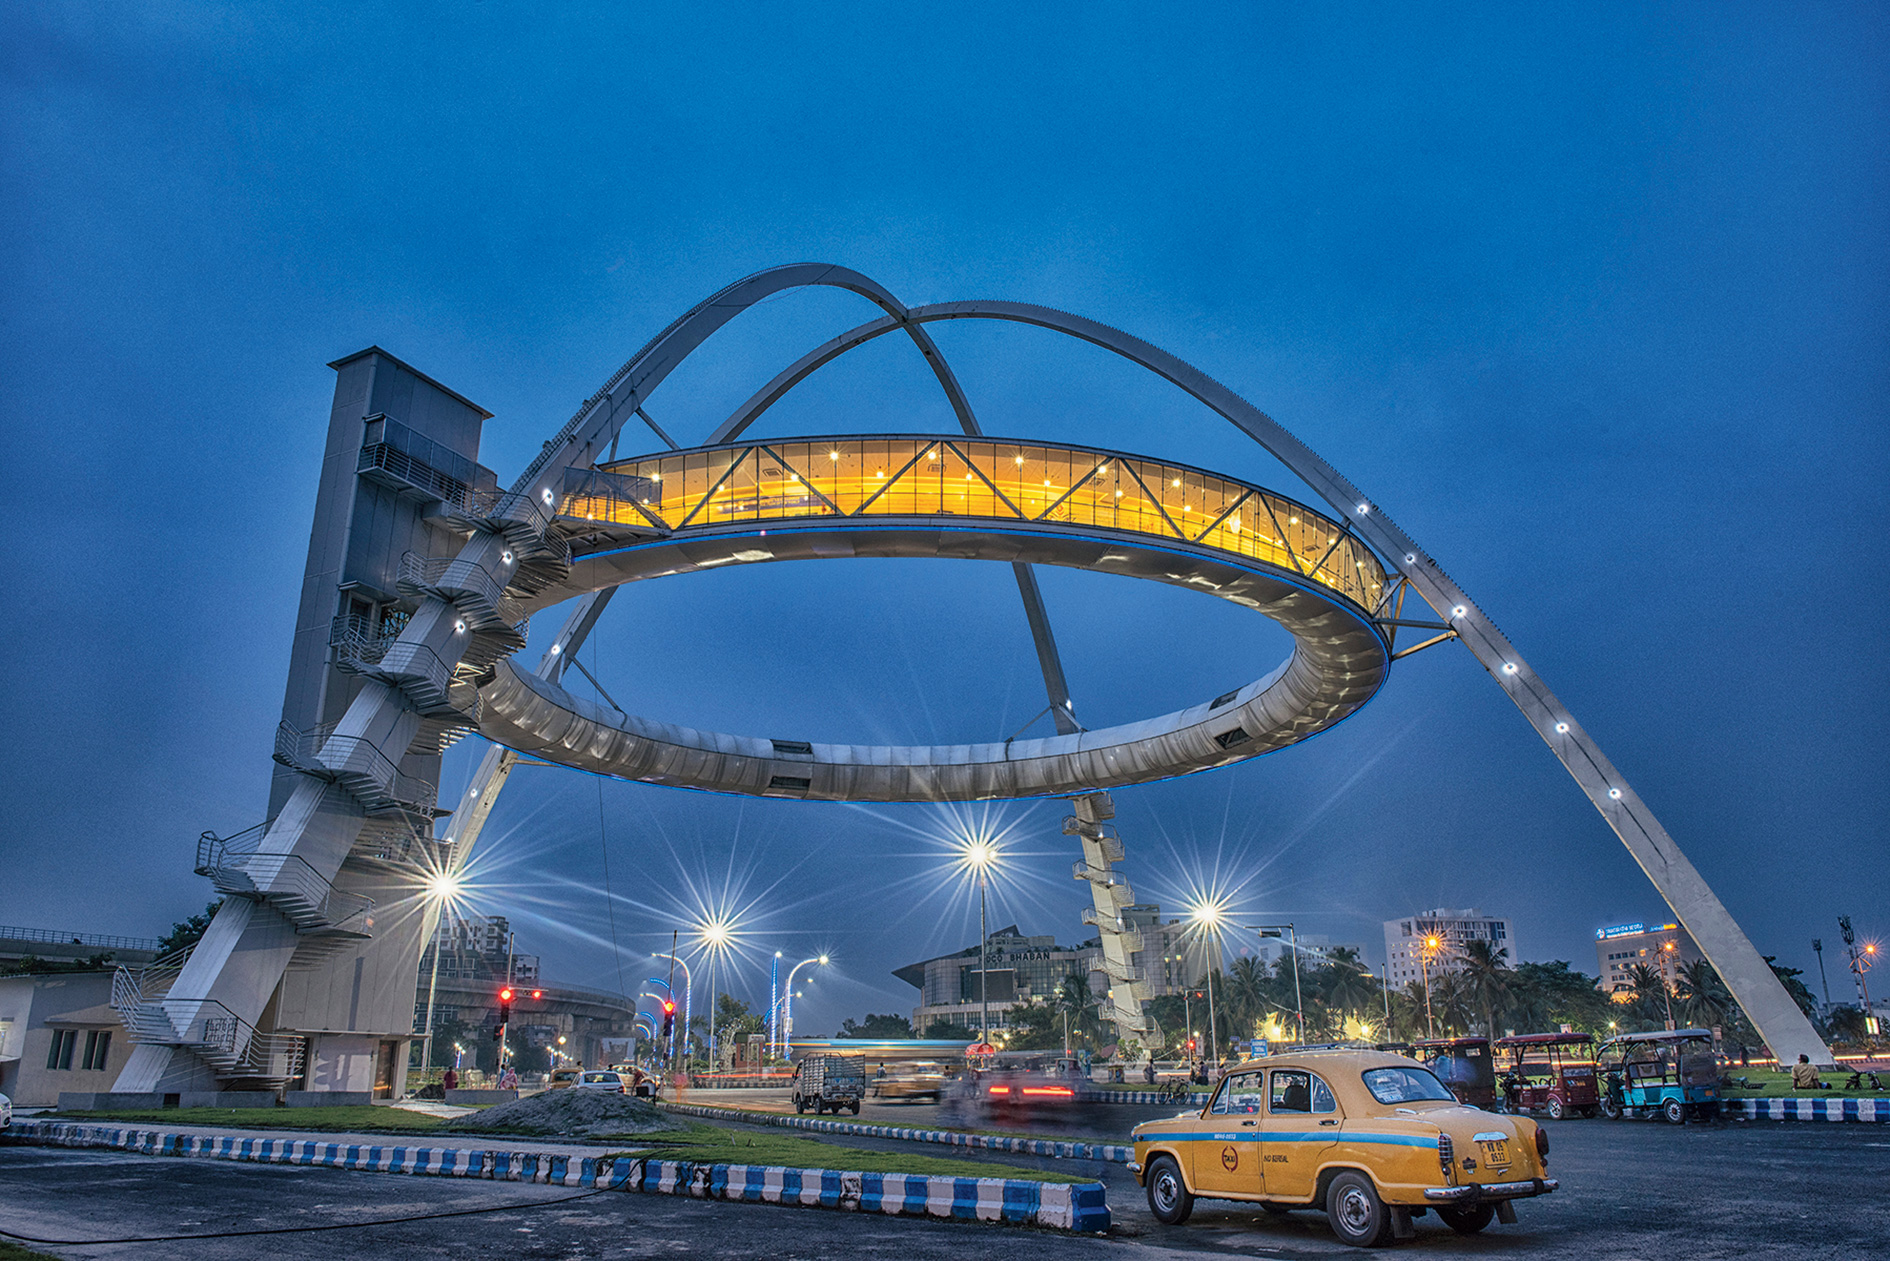 The Kolkata Gate lit up at twilight.